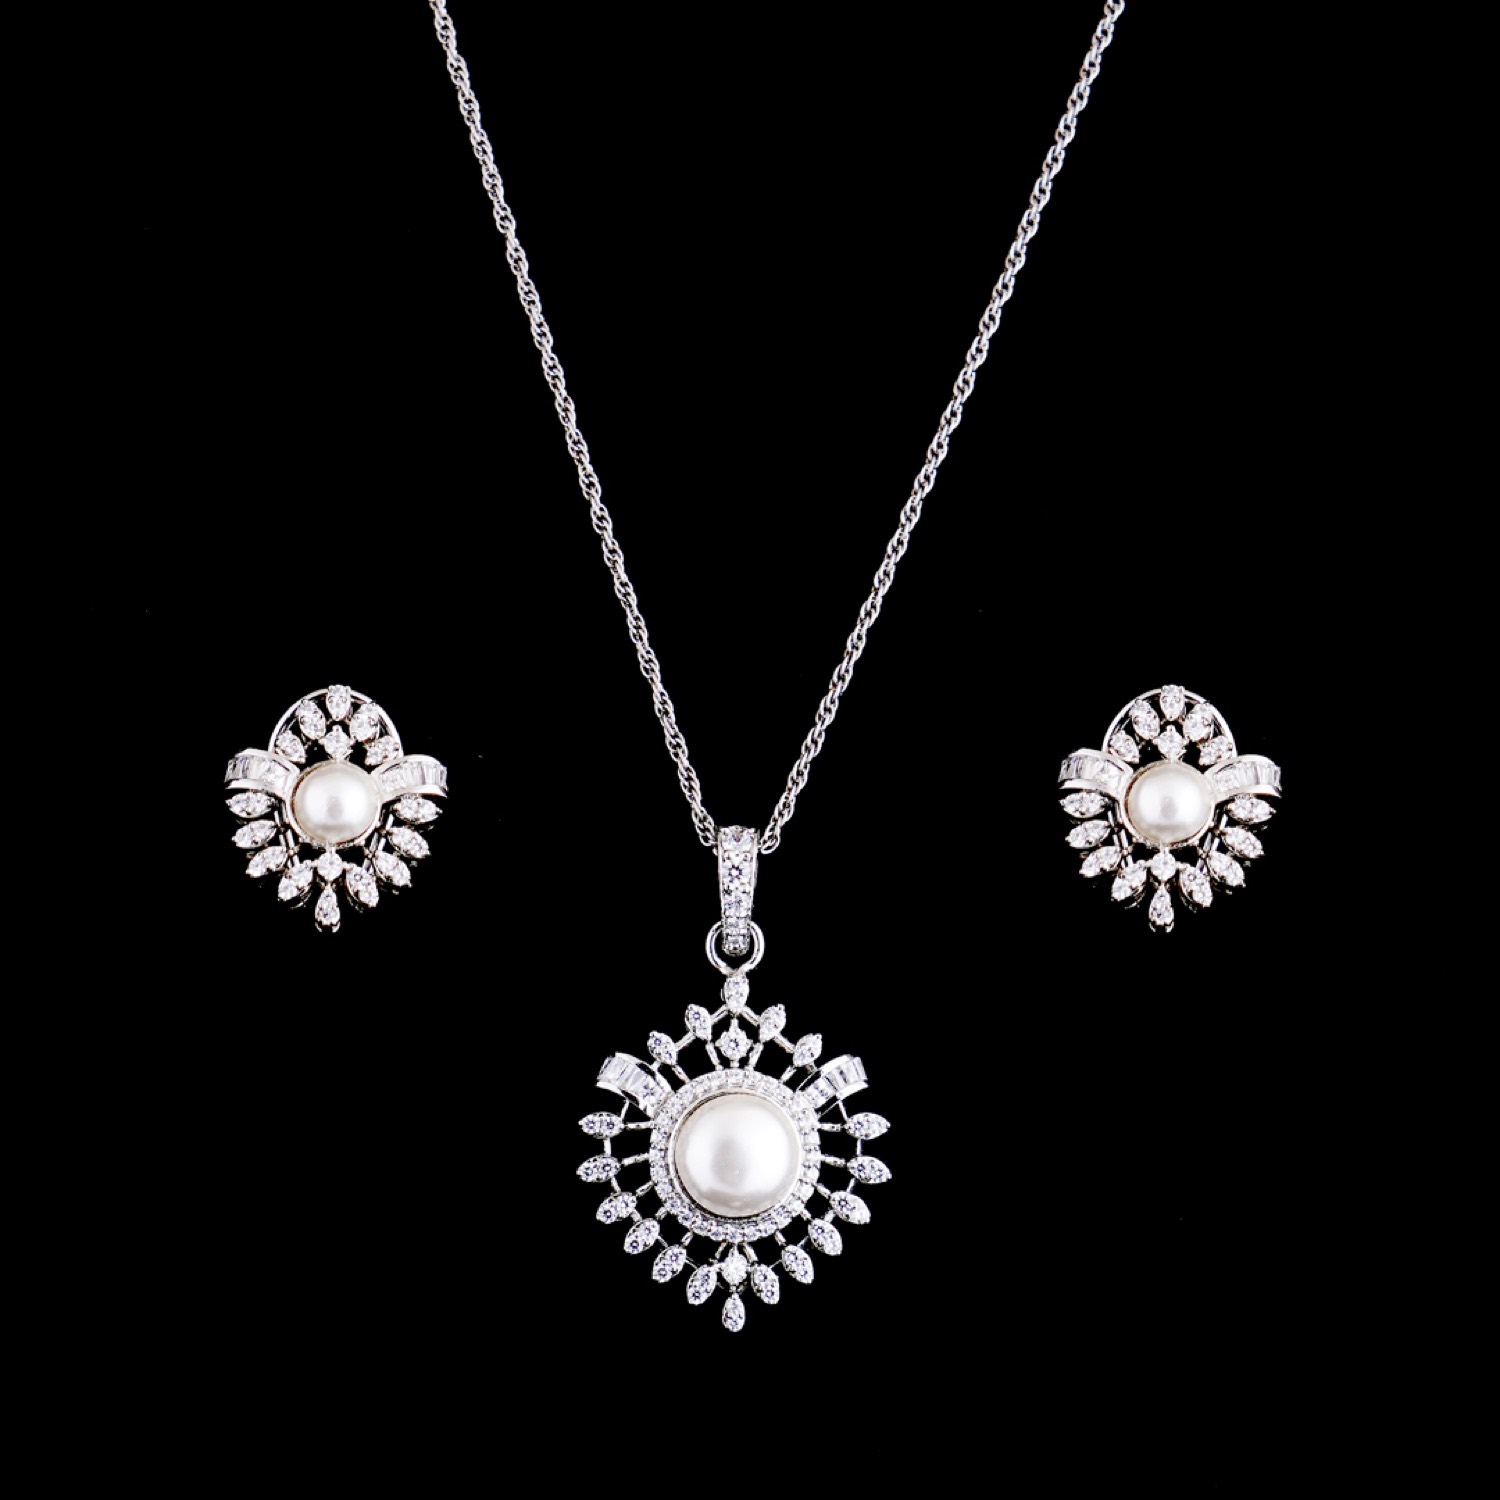 varam_swarovski_white_pearl_silver_chain_with_earrings_33-1